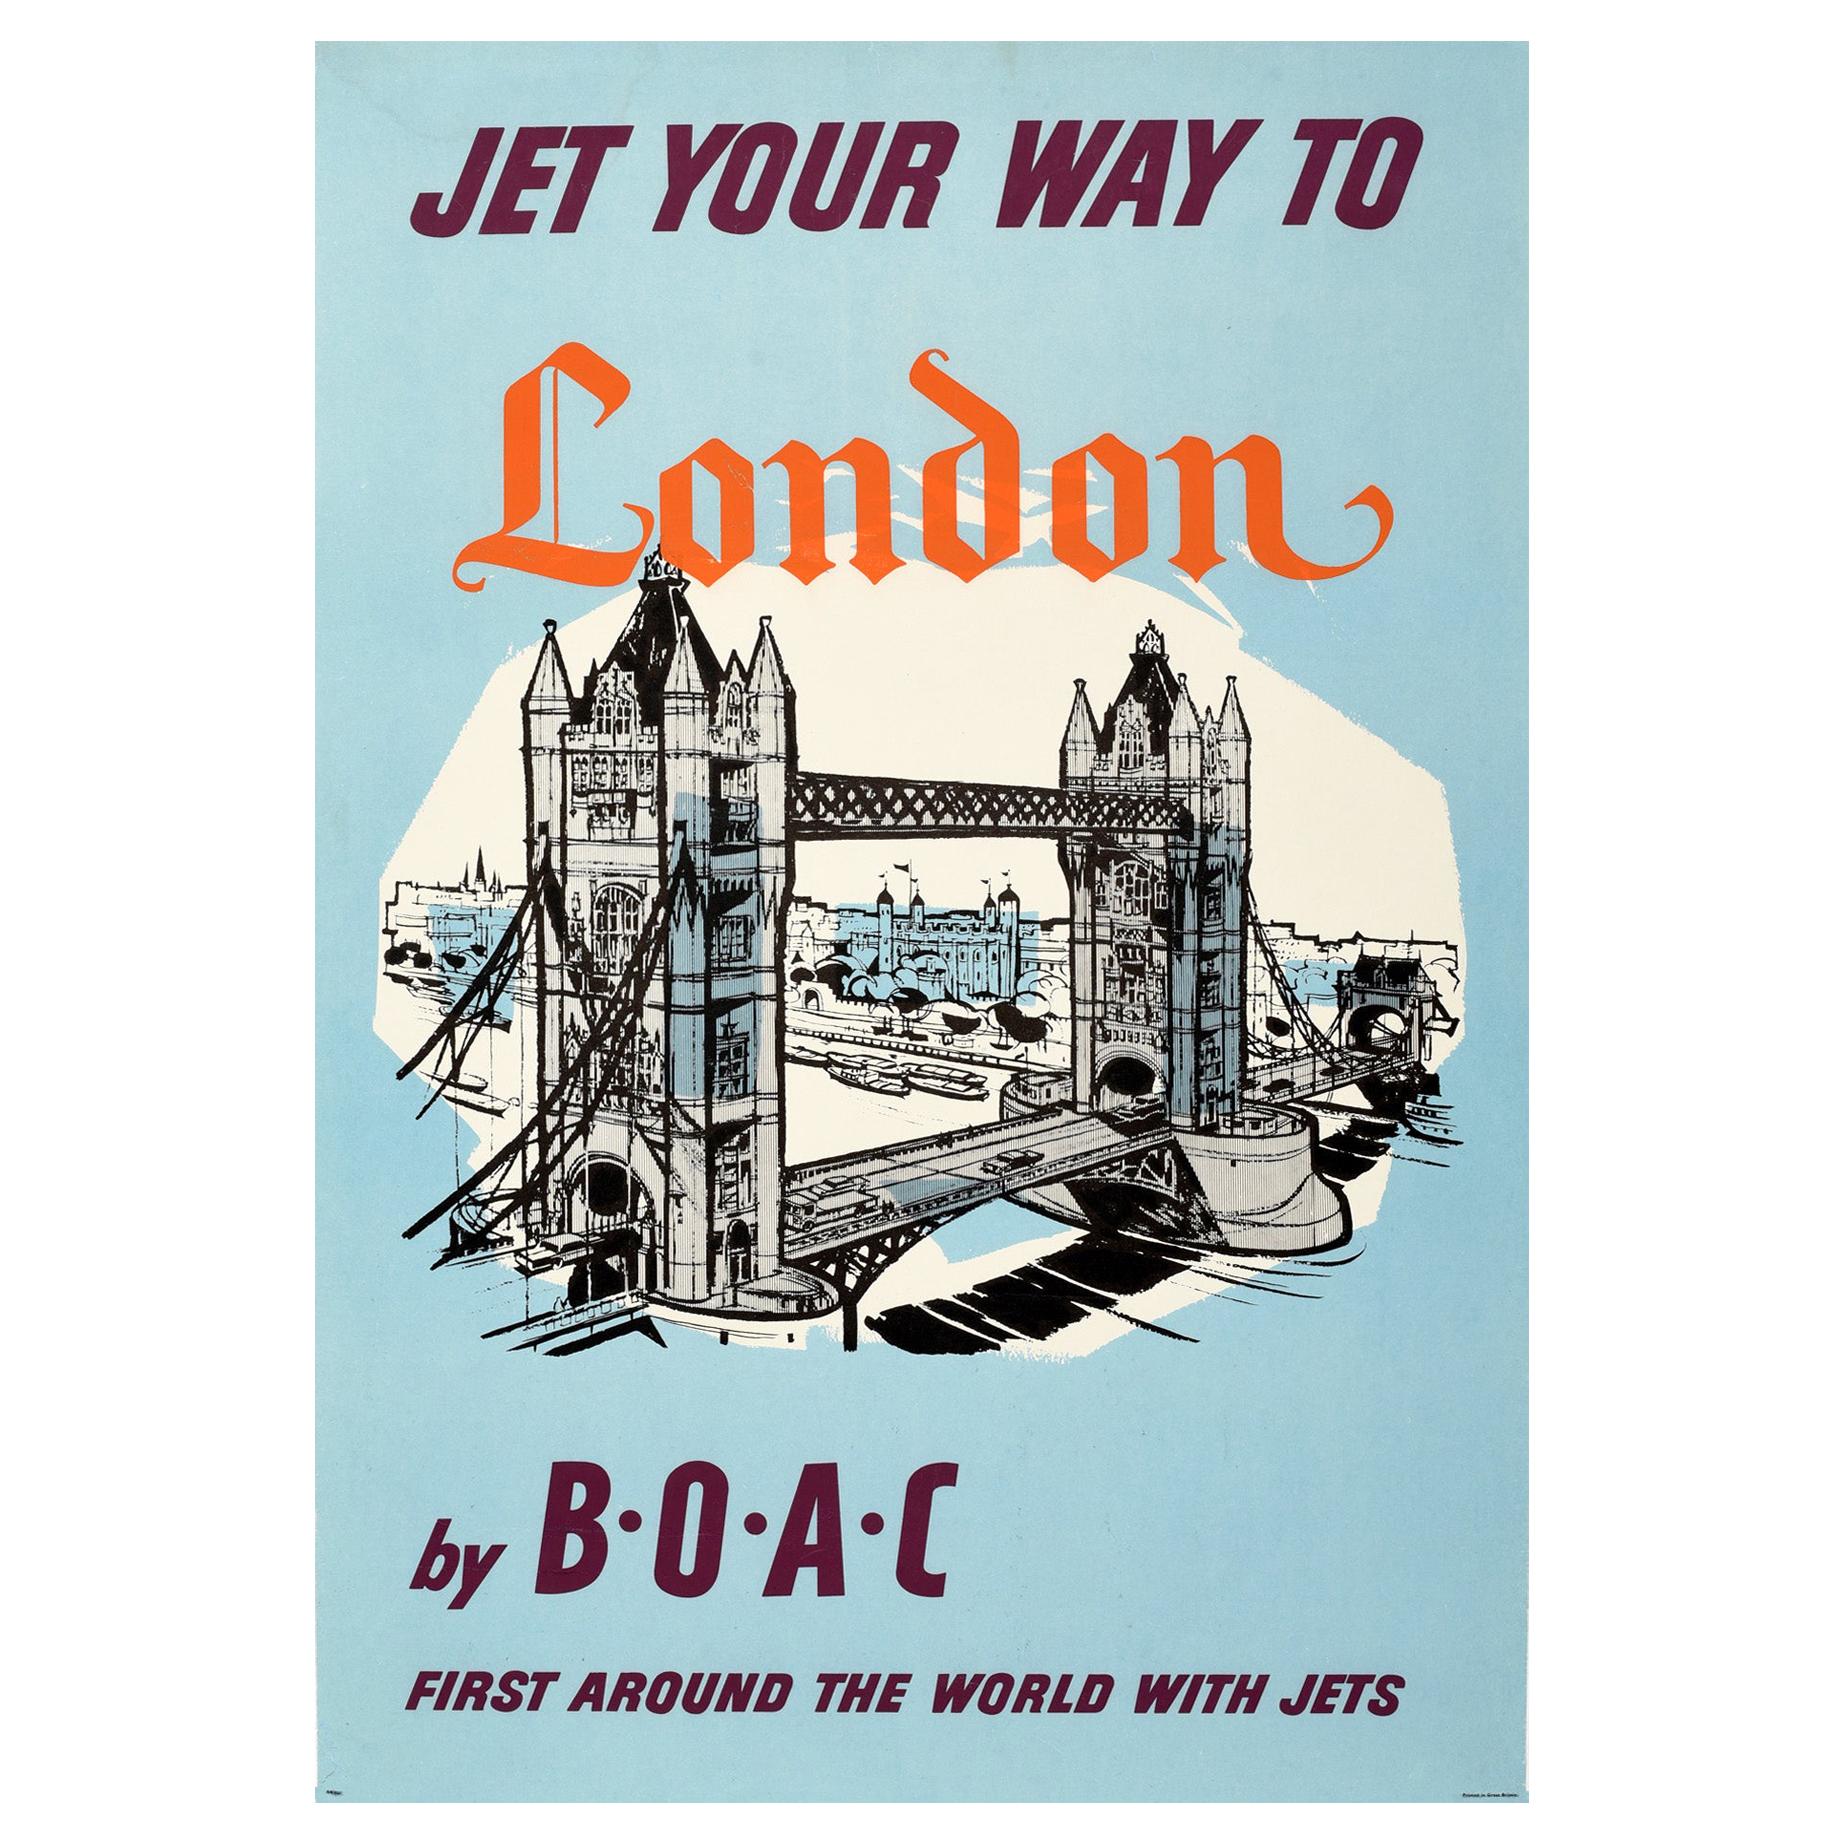 Original Vintage Travel Poster Jet Your Way To London BOAC Tower Bridge Thames